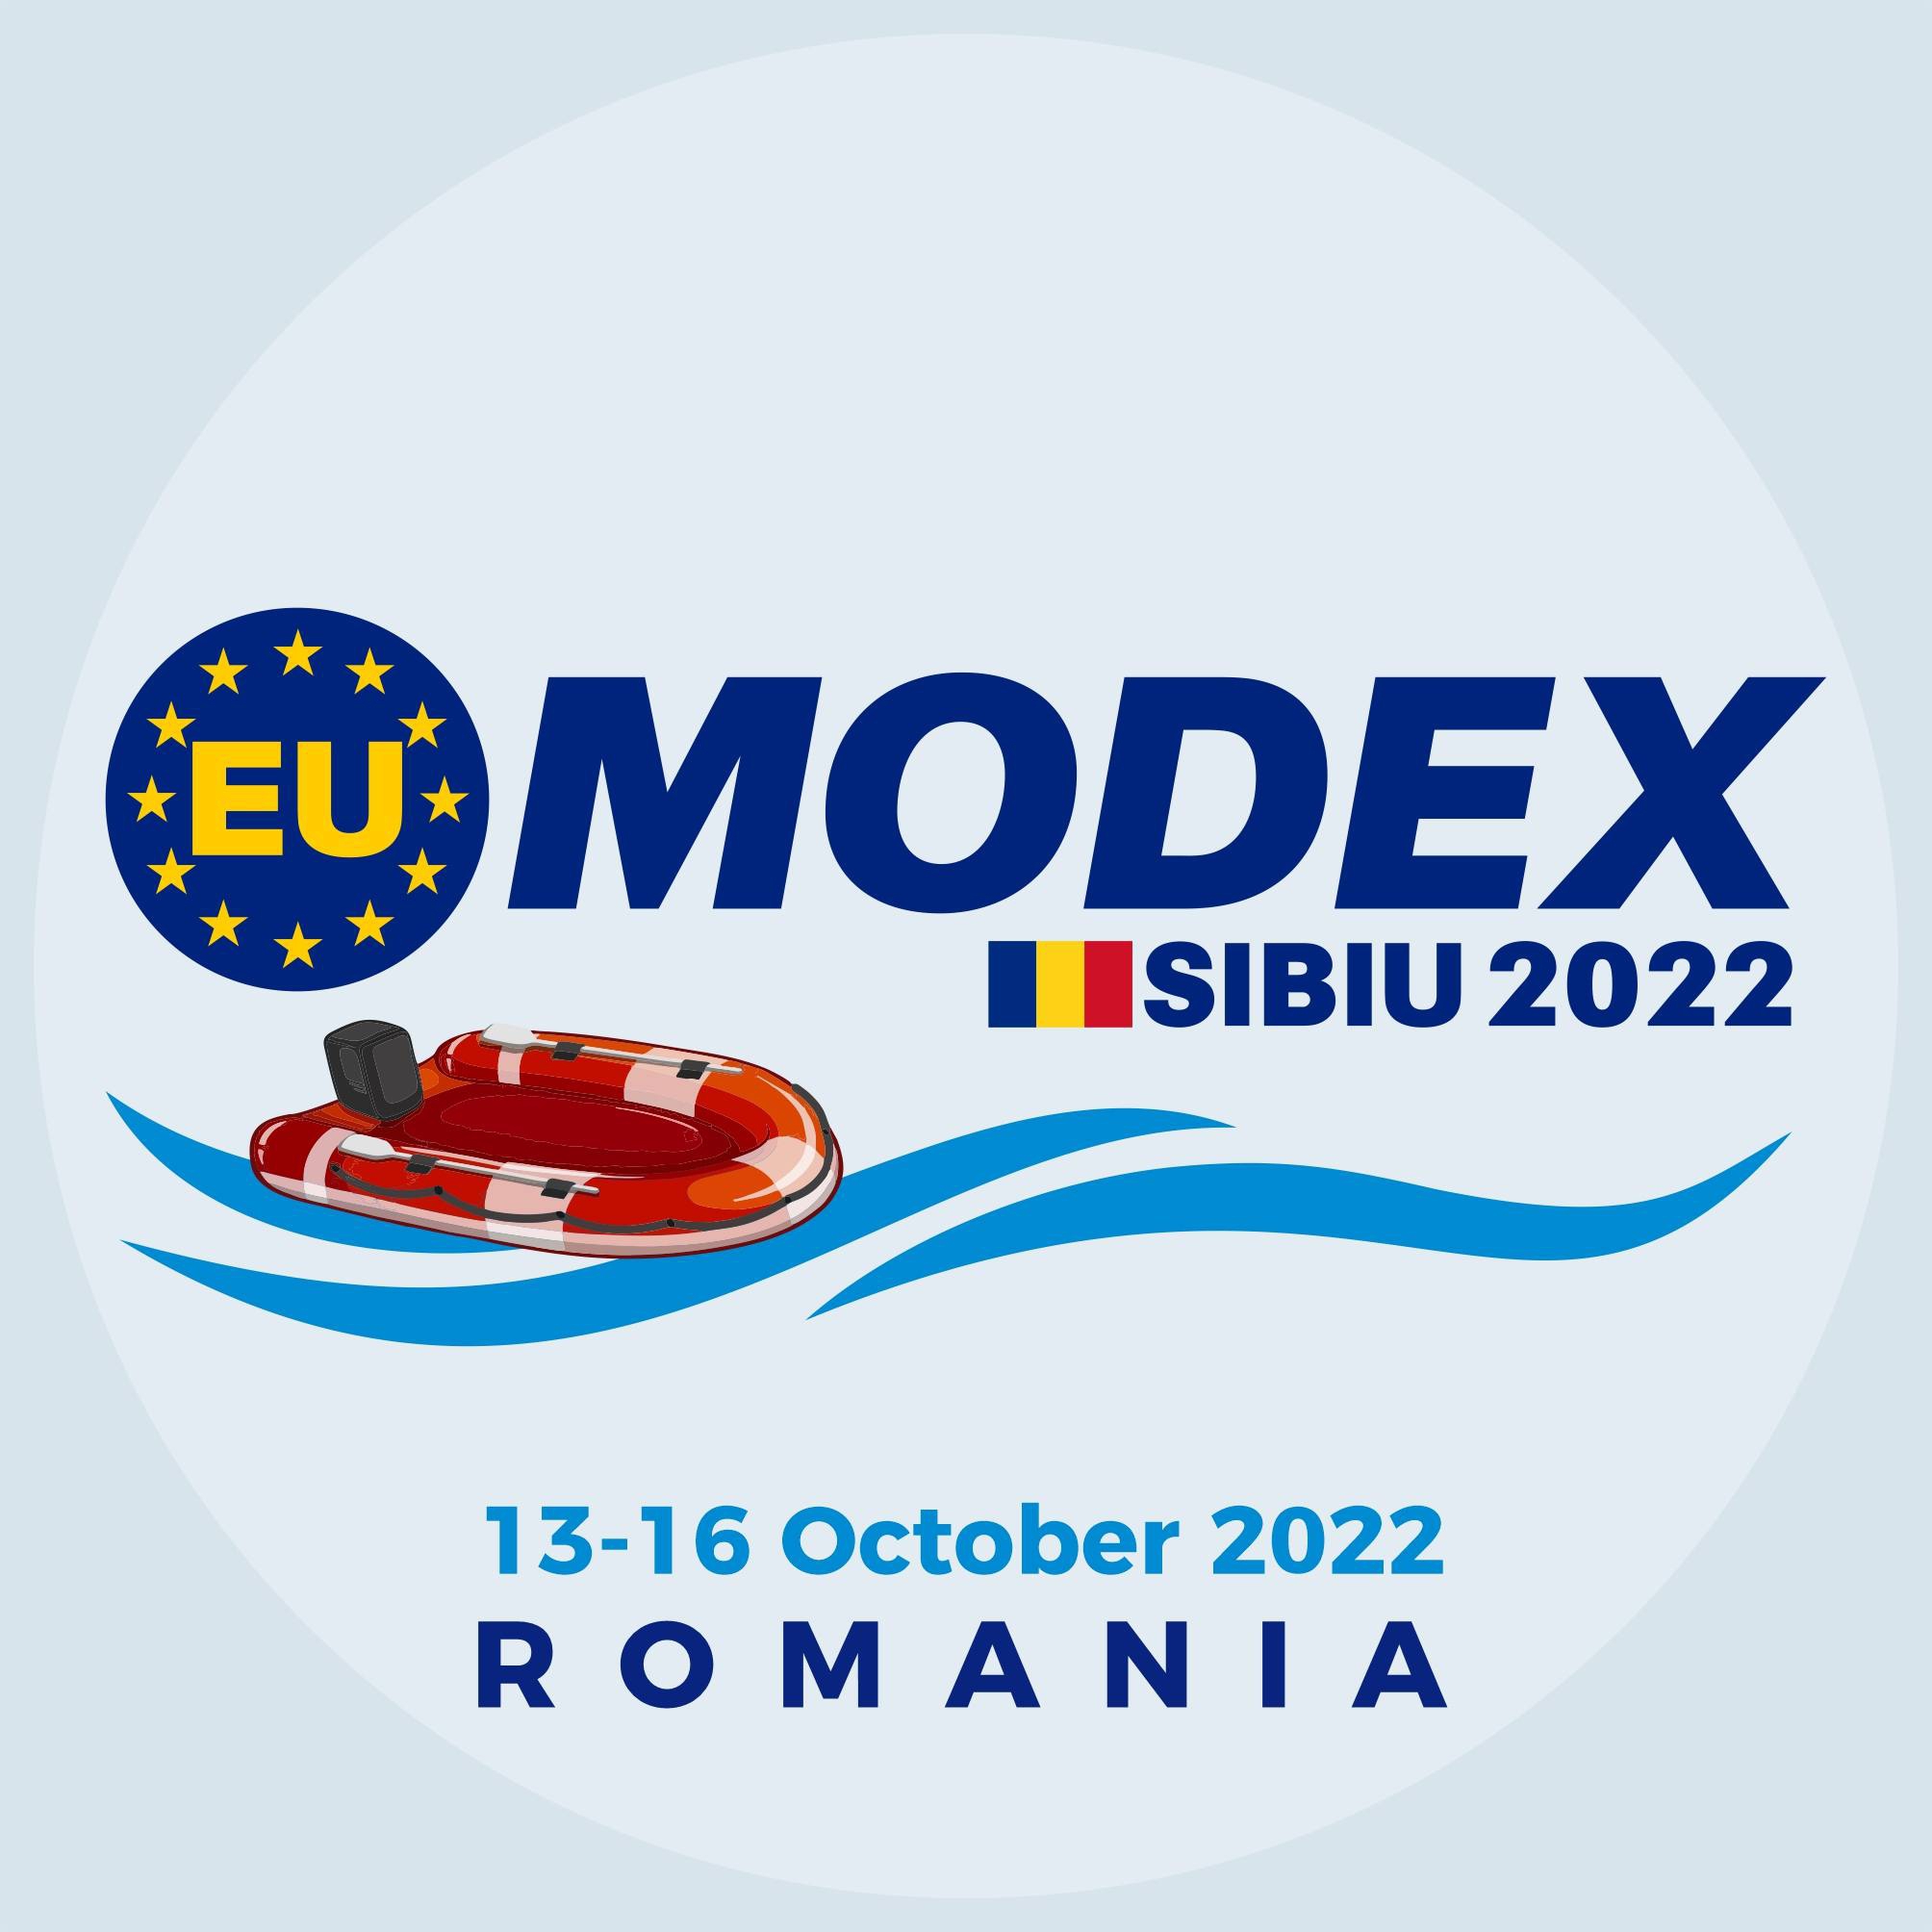 EU MODEX SIBIU 2022 - Übungsverlauf